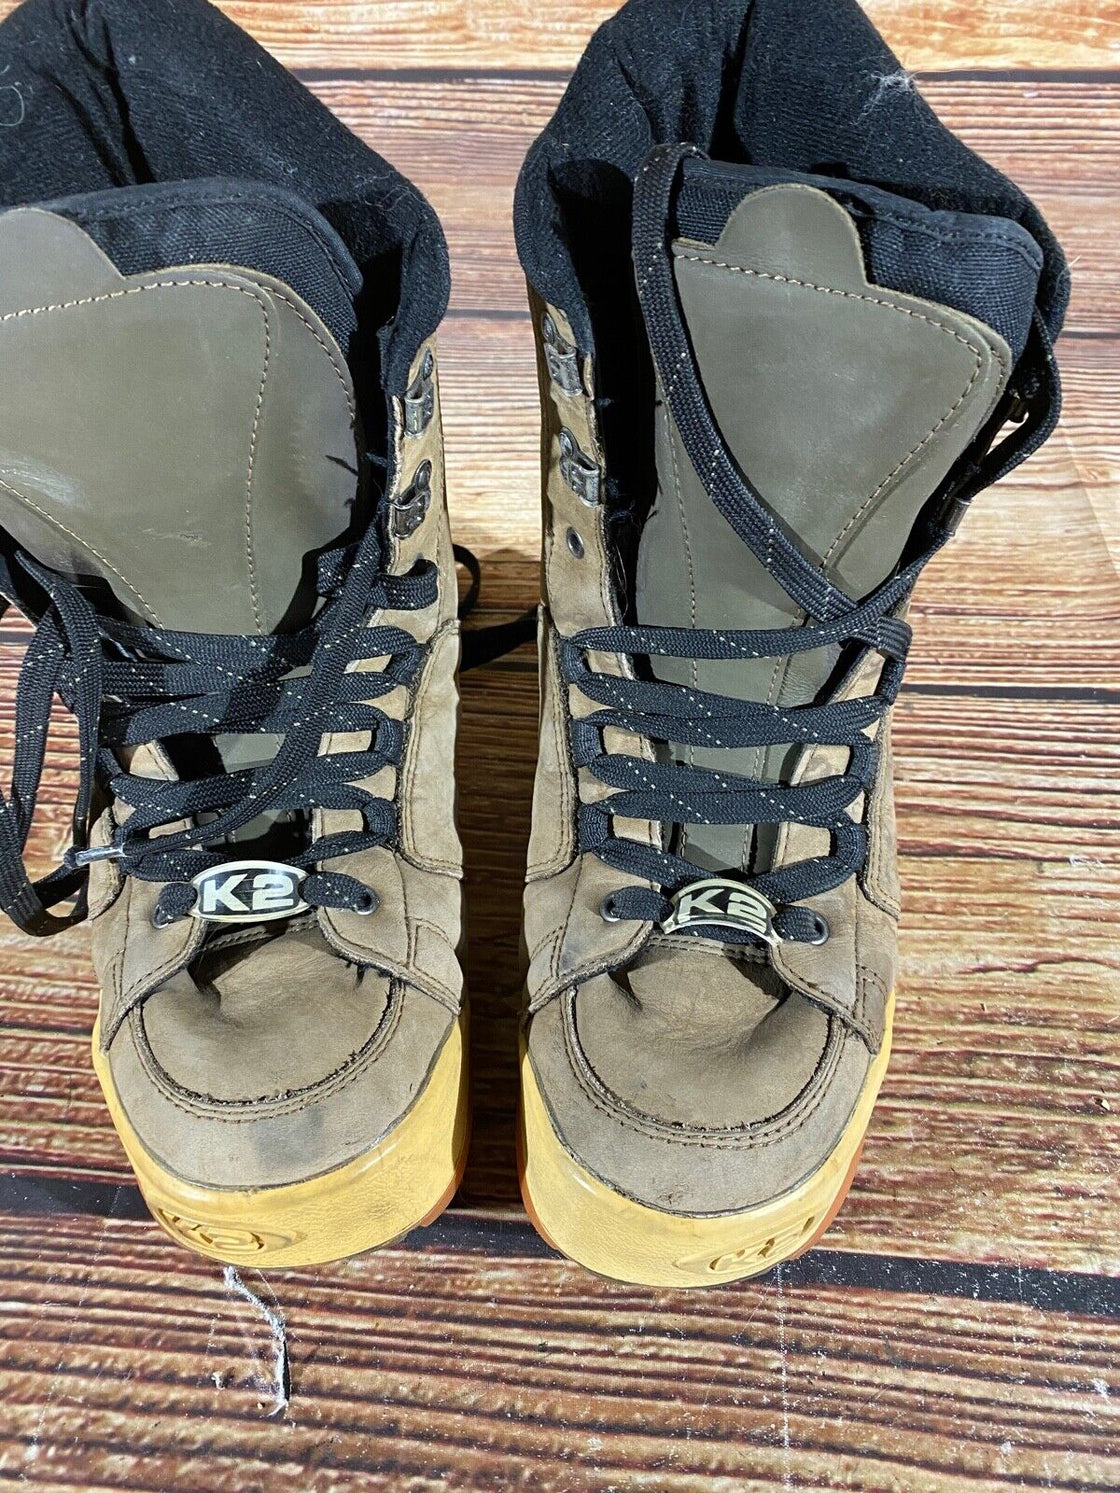 K2 Snowboard Boots Size EU41.5, US8.5, UK7, Mondo 262 mm E